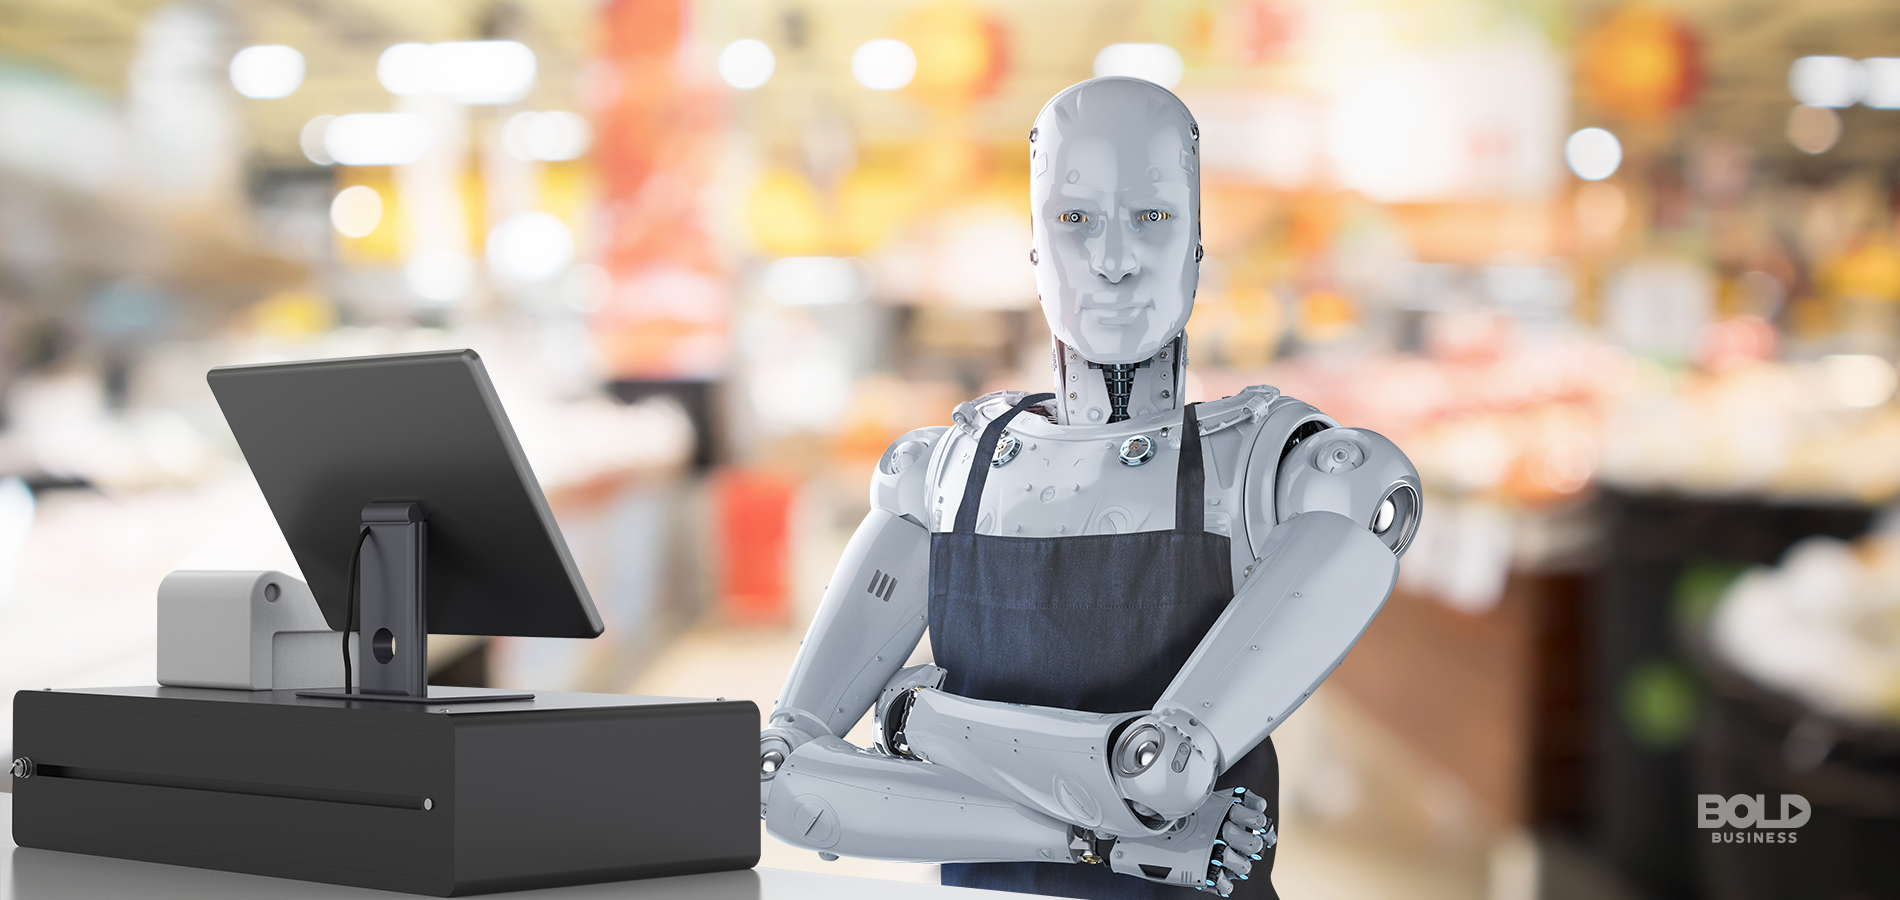 robotic workforce, robot in an apron